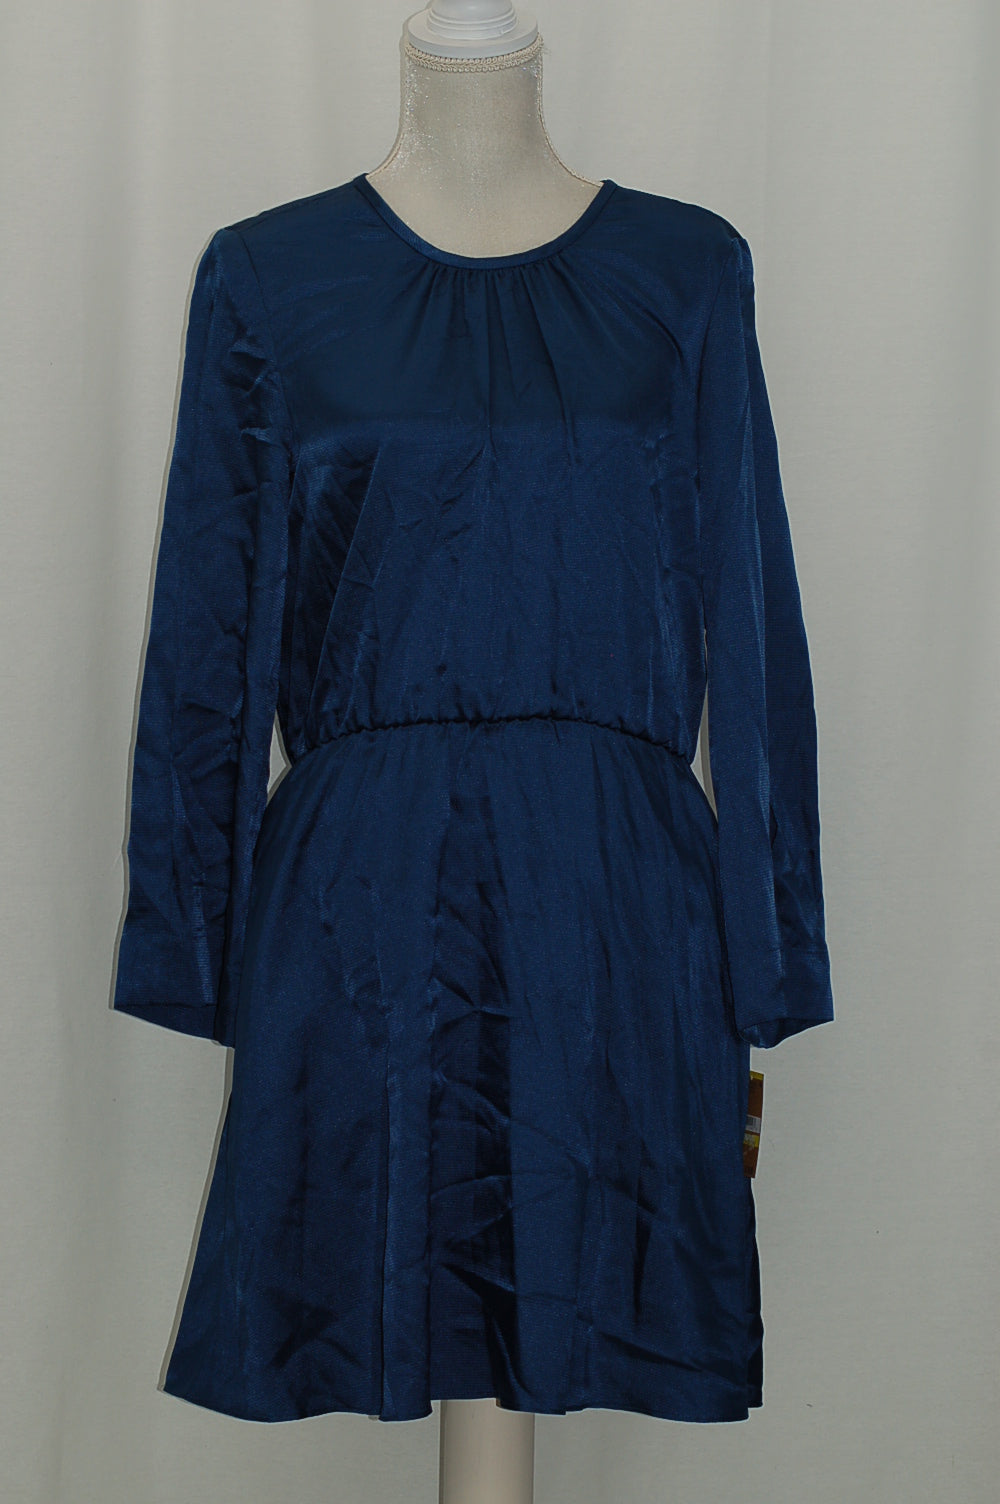 RACHEL Rachel Roy Julia Split-Sleeve Blouson Dress Teal Blue M